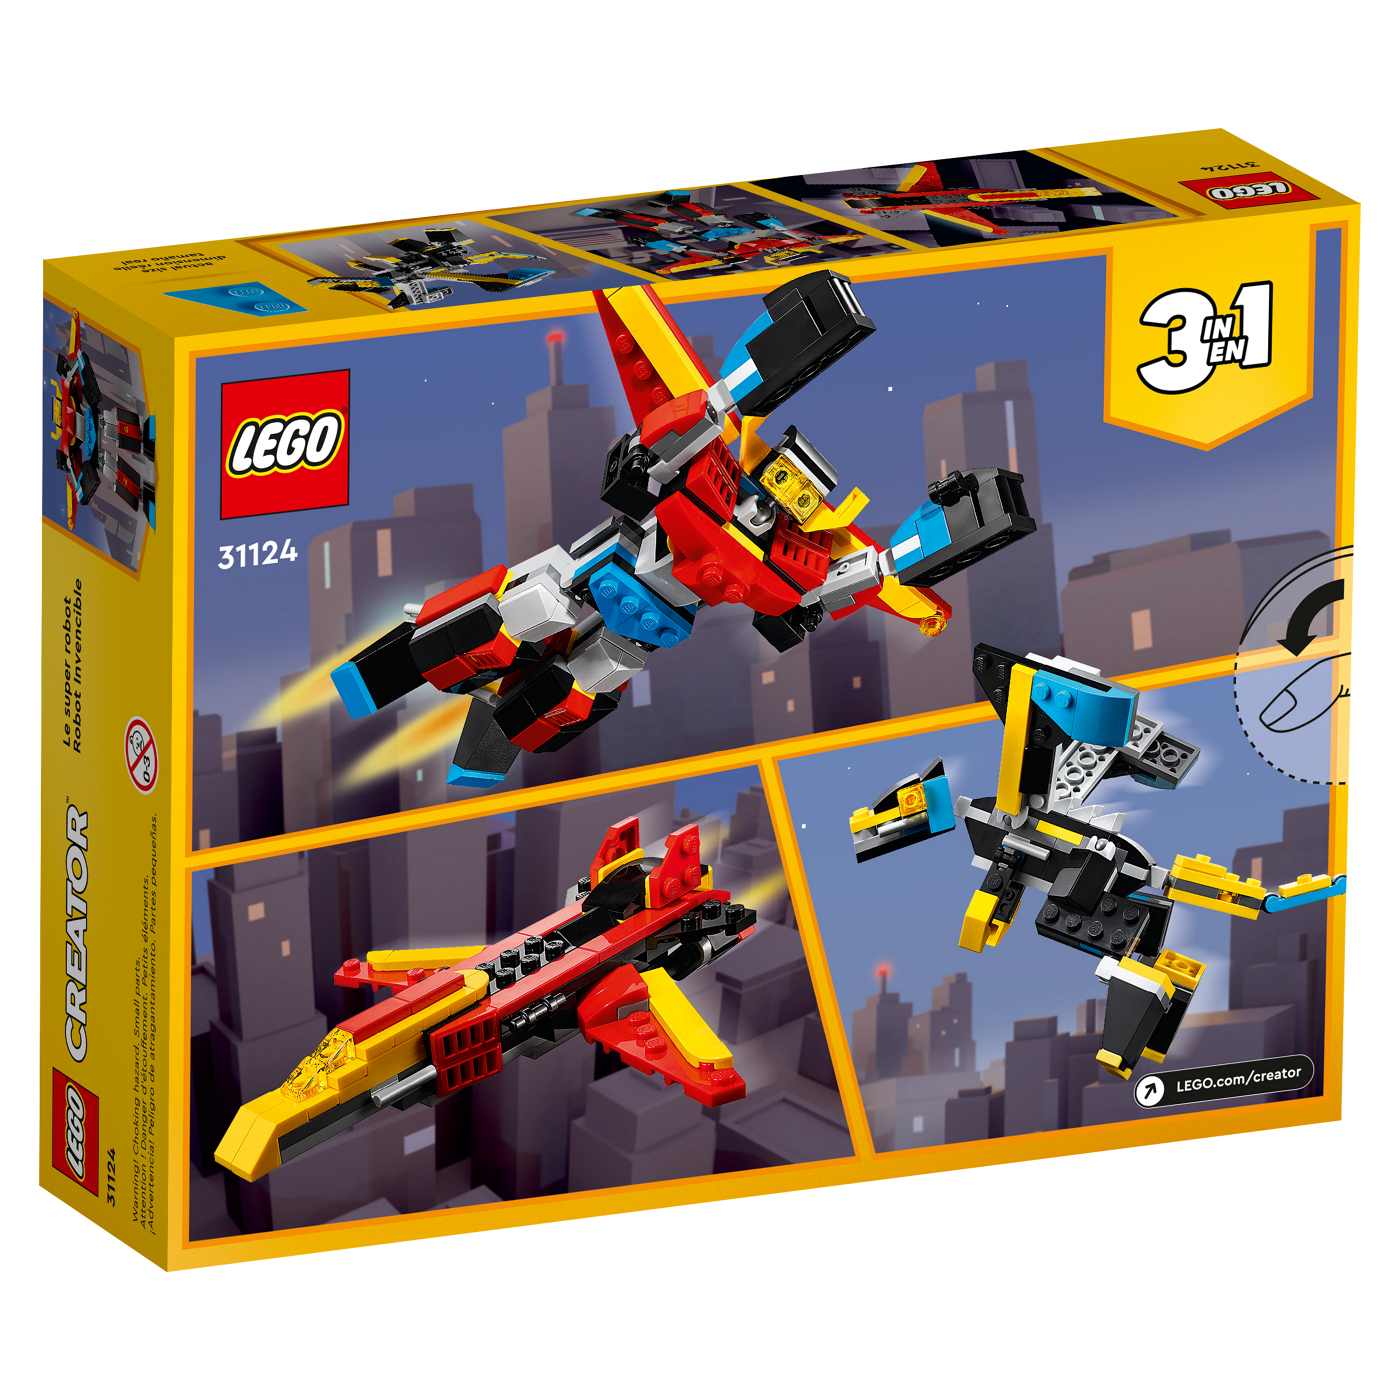 LEGO Creator 3-in-1 Super Robot Set - Shop Lego & Building Blocks